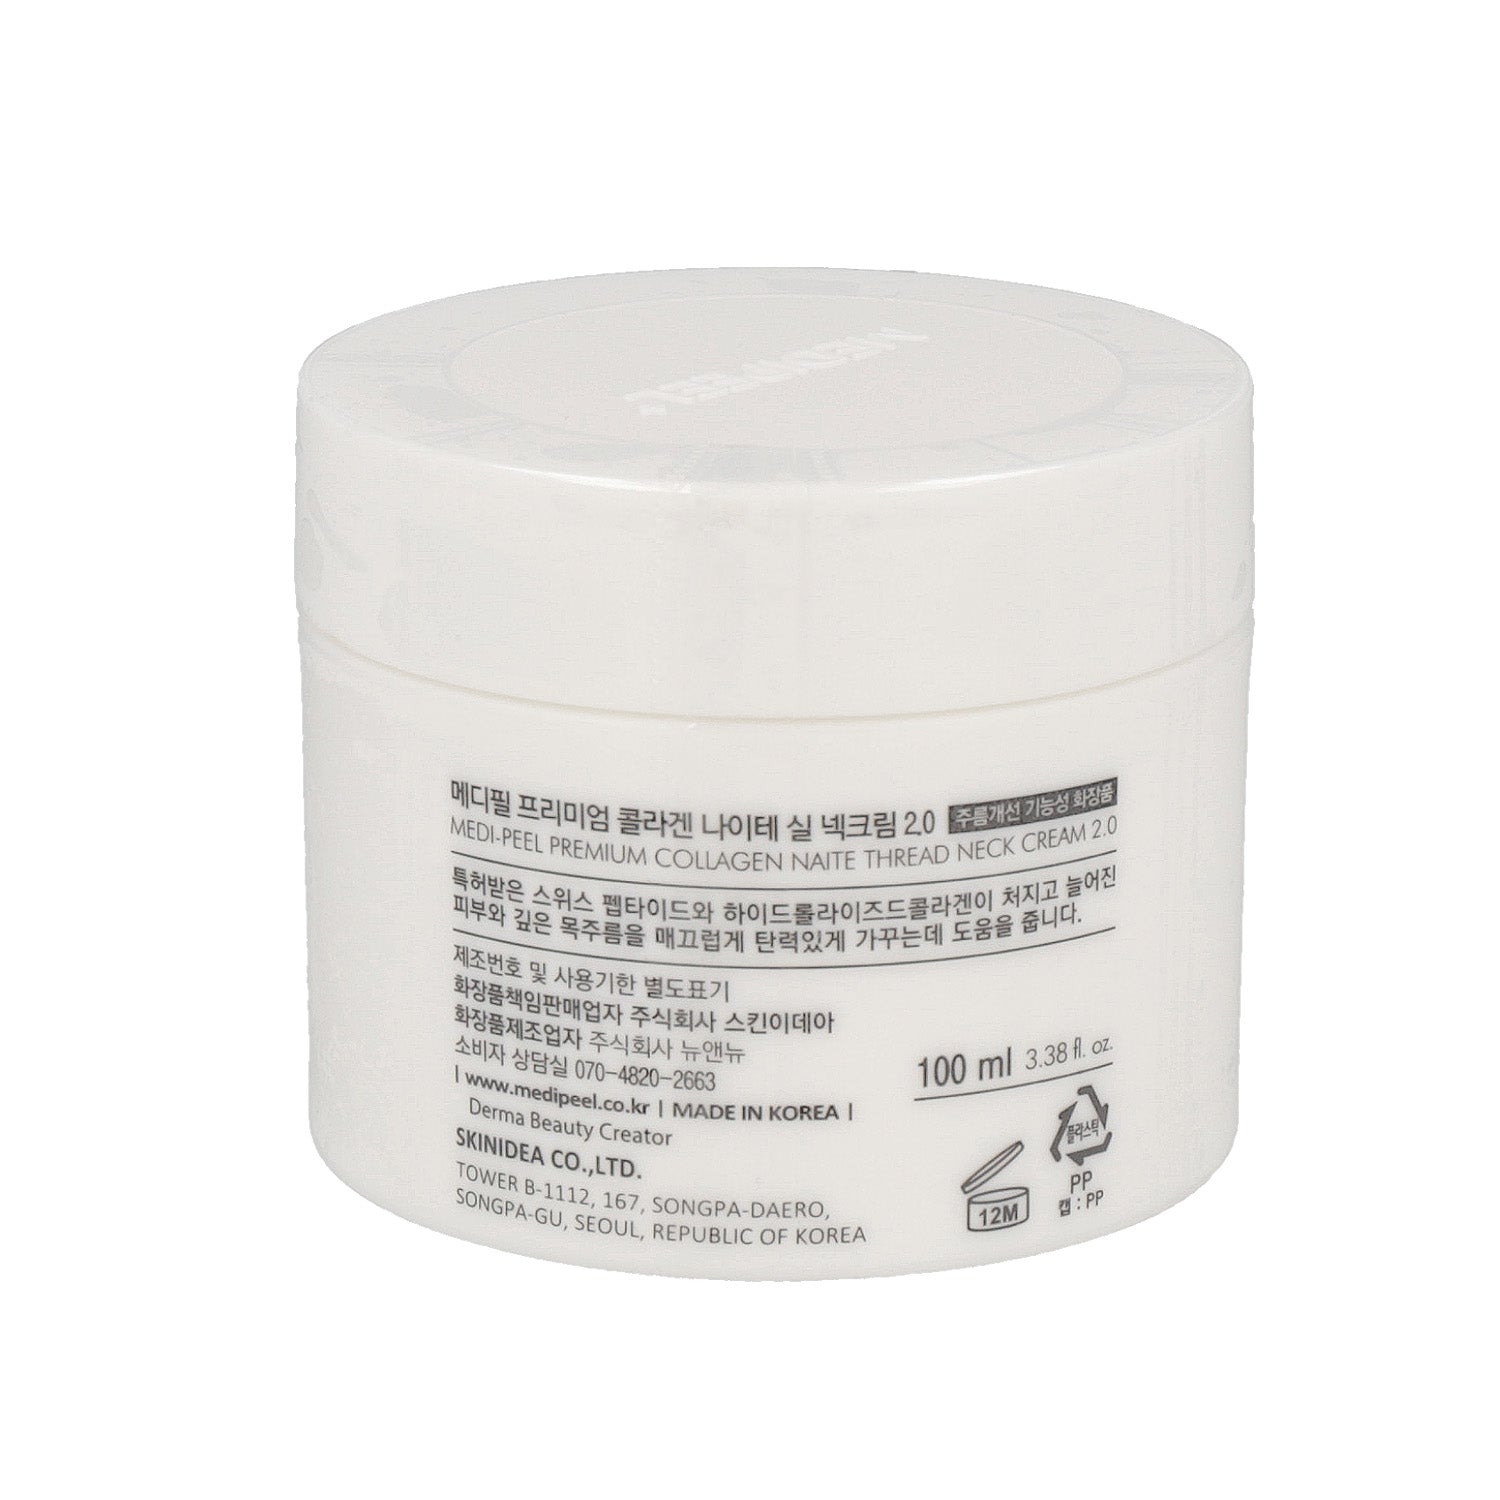 White bottle of MEDI-PEEL Collagen Naite Thread Neck Cream Premium 2.0, 100ml skincare product